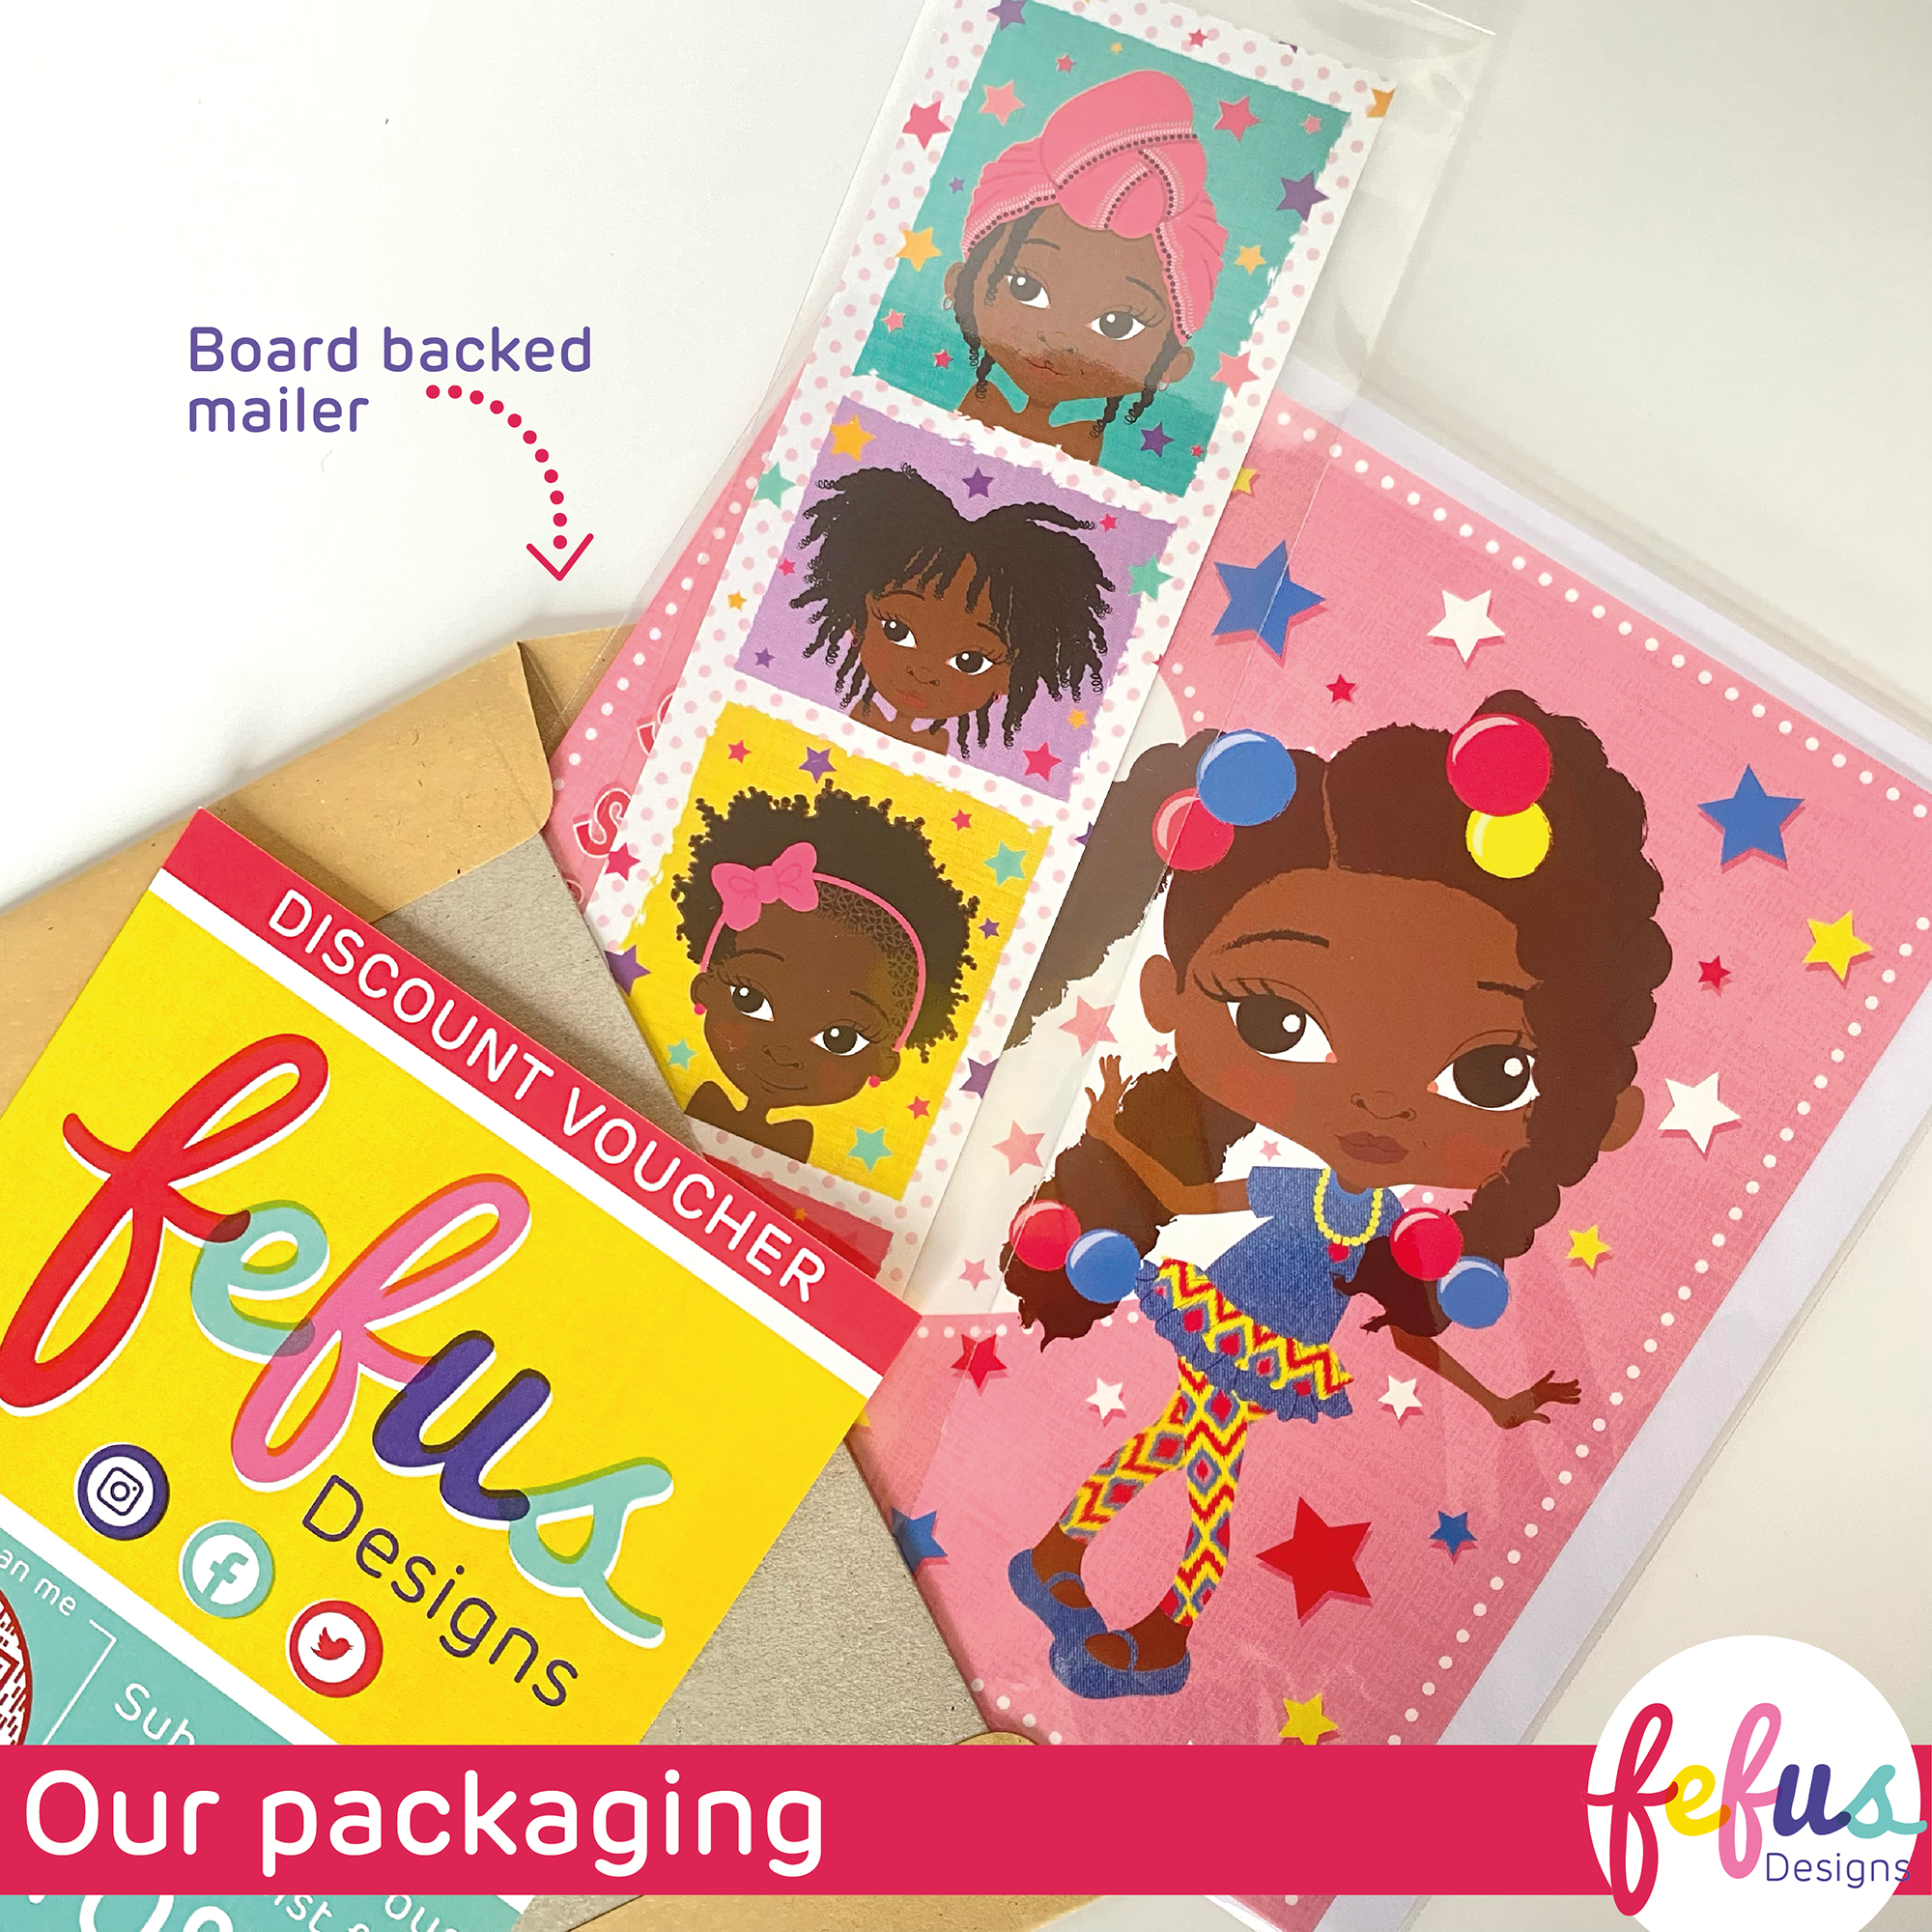 BE YOU Puff Girl  - Black Girls Birthday Card | Fefus designs